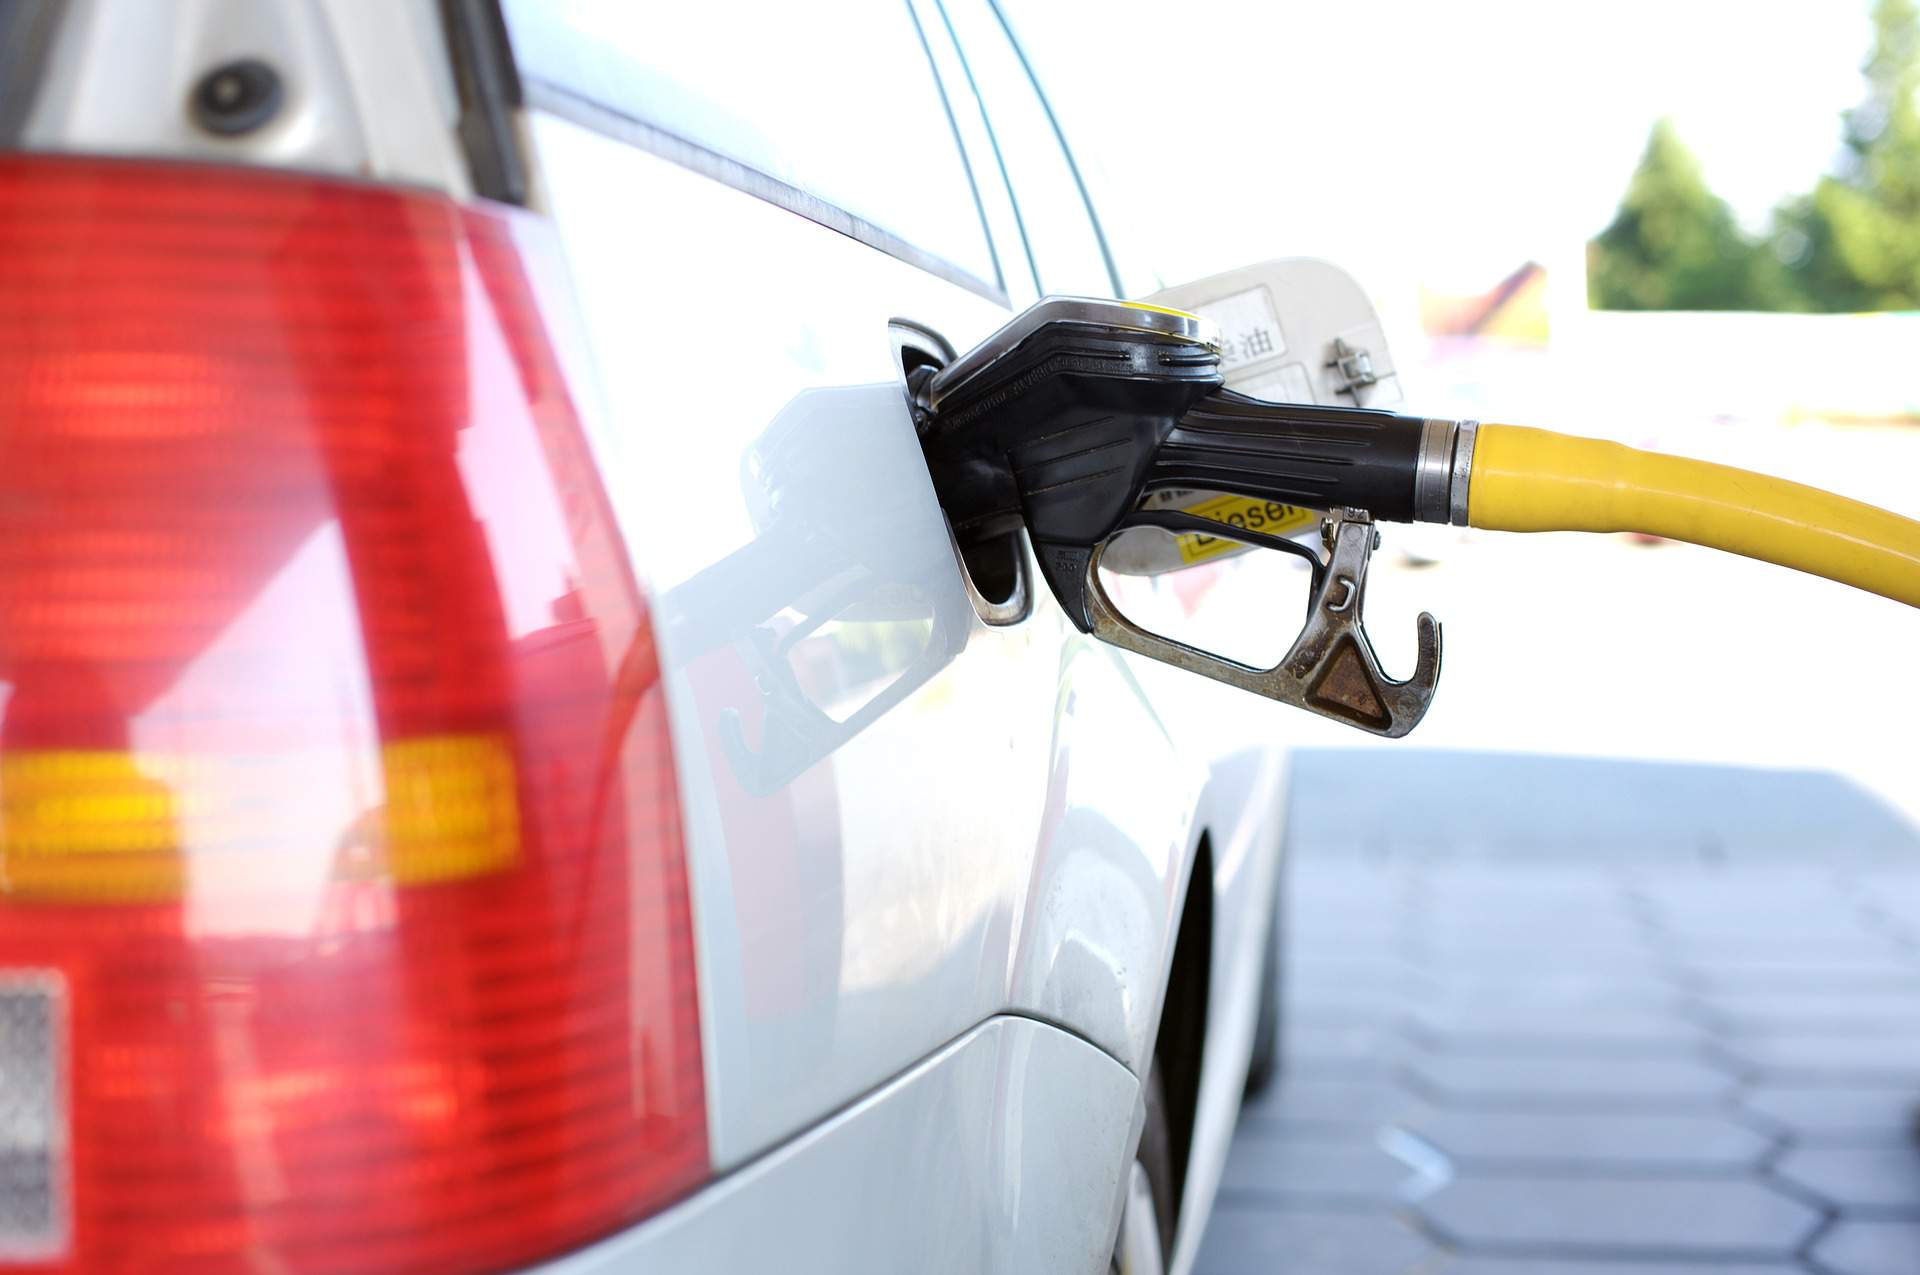 Gas prices near $3 per gallon as travel starts again